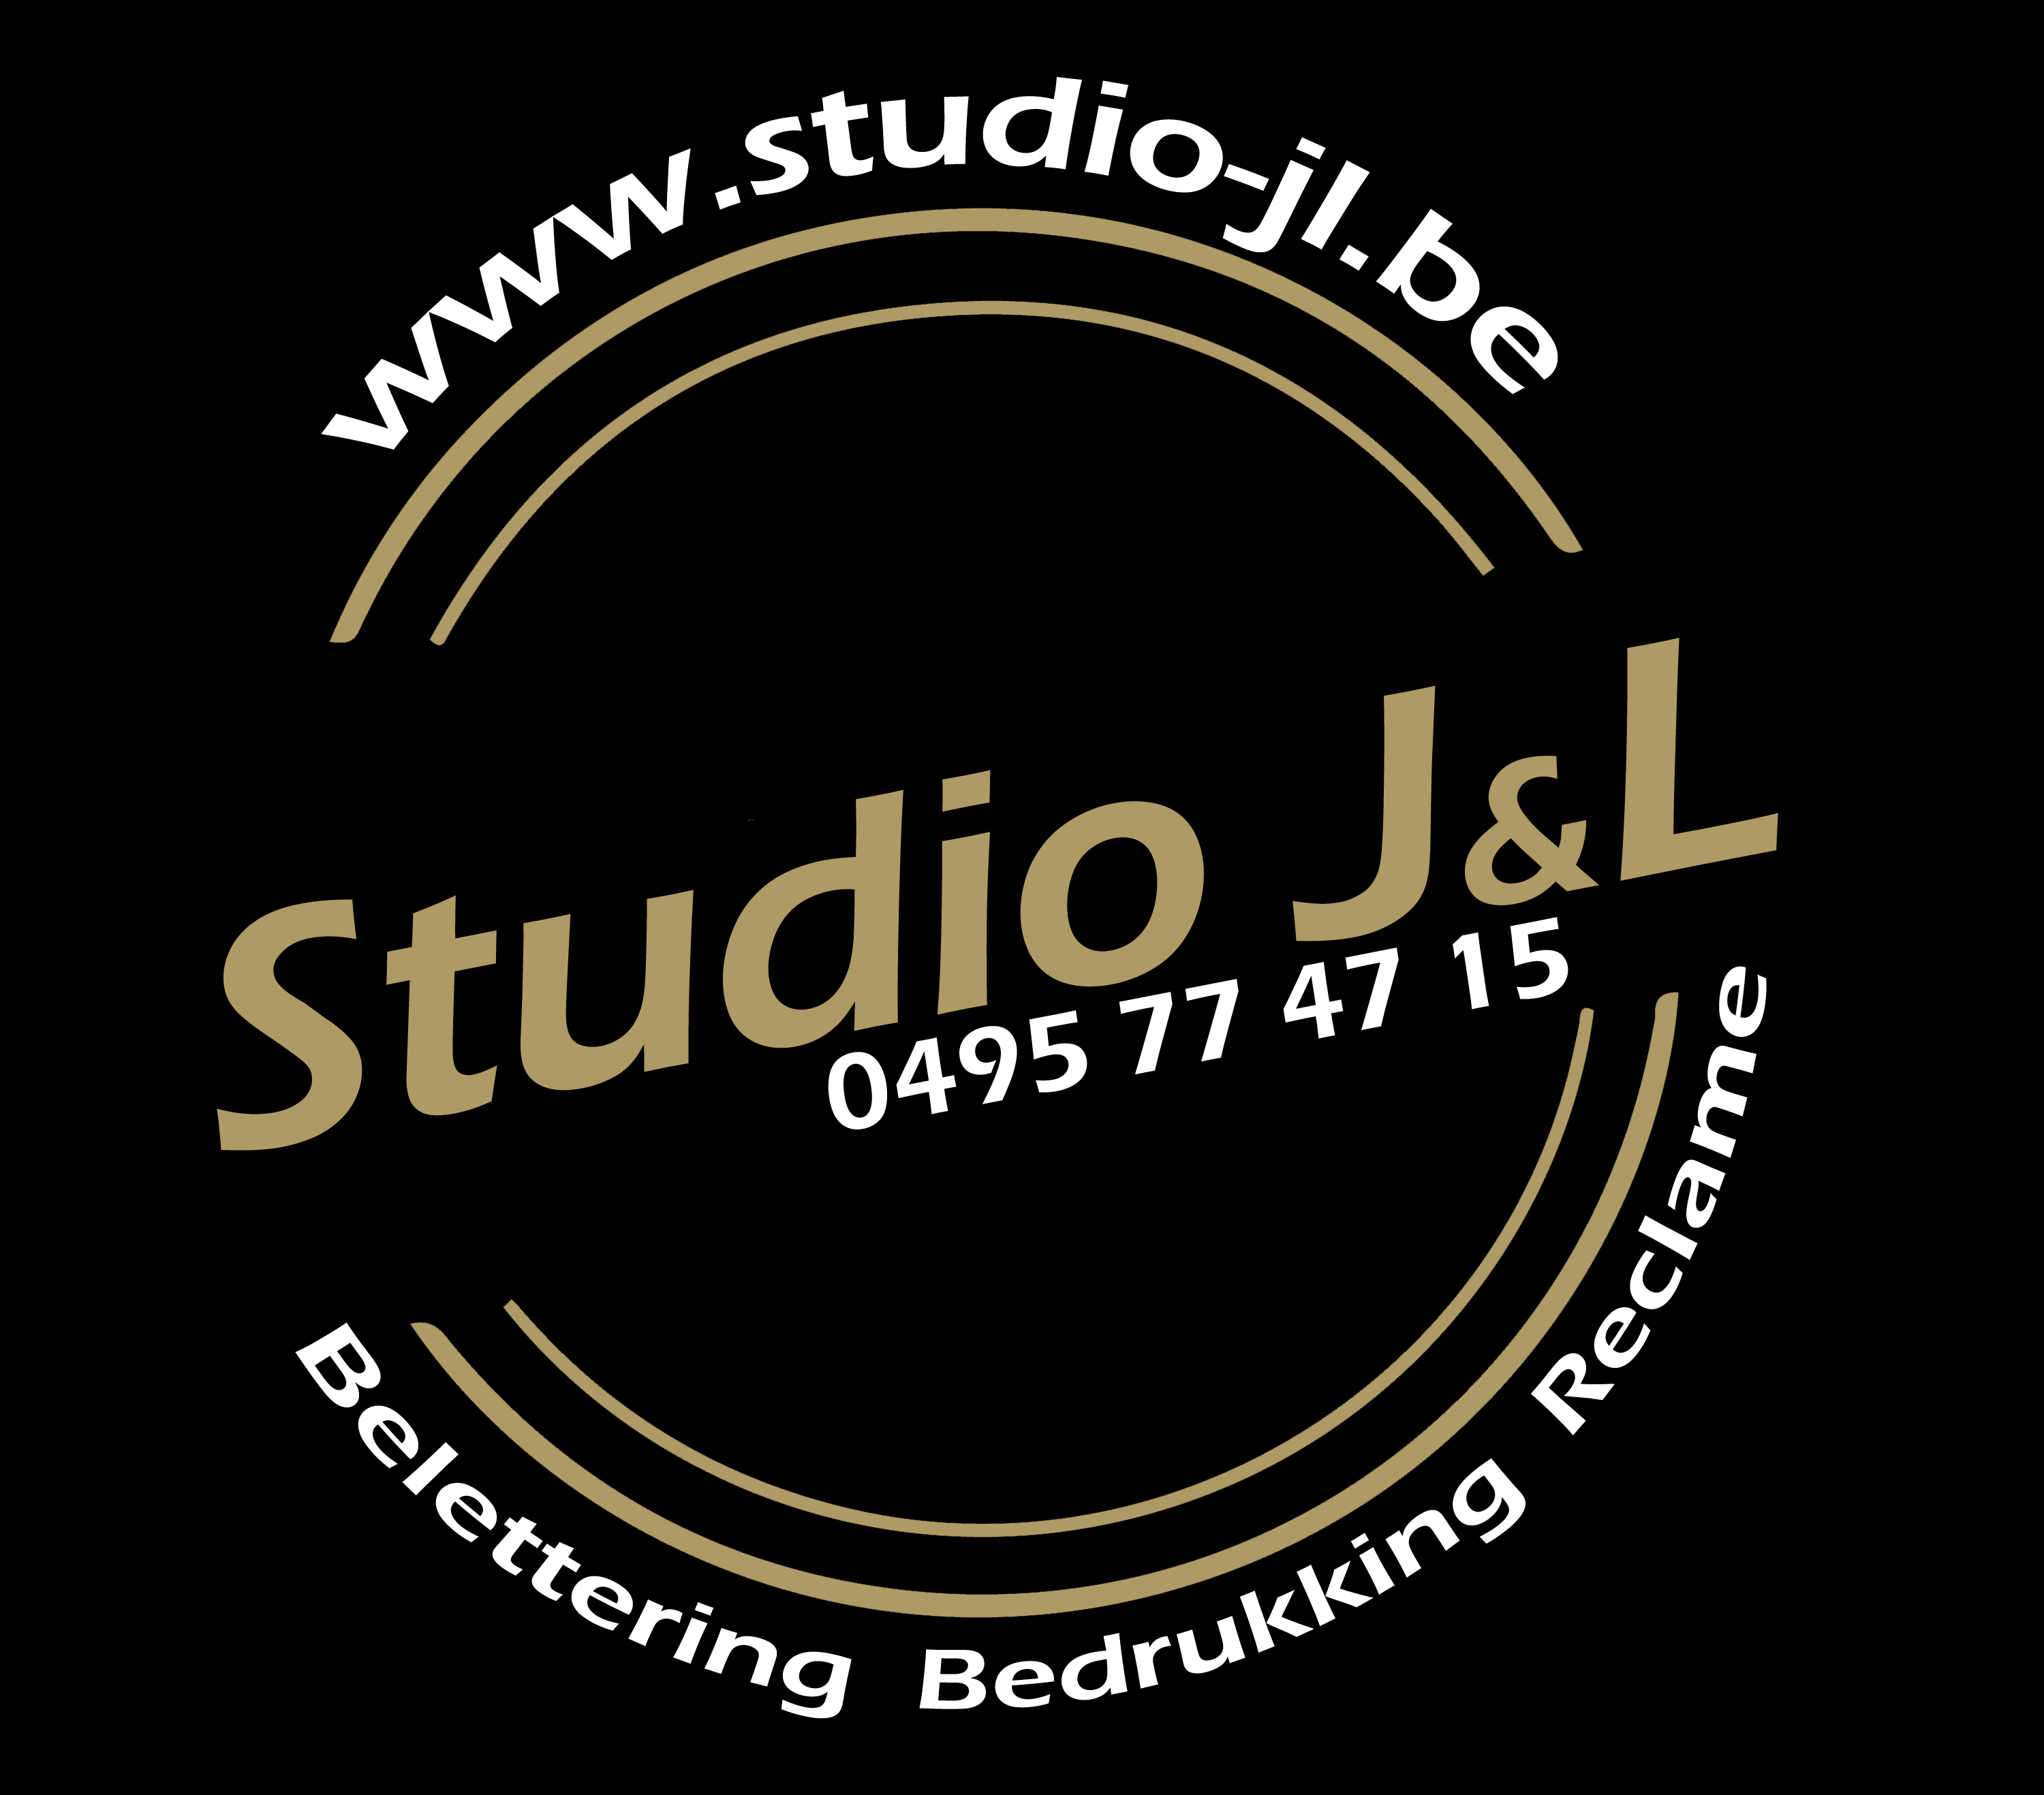 reclamebureau's Sint-Lievens-Houtem Studio J&L